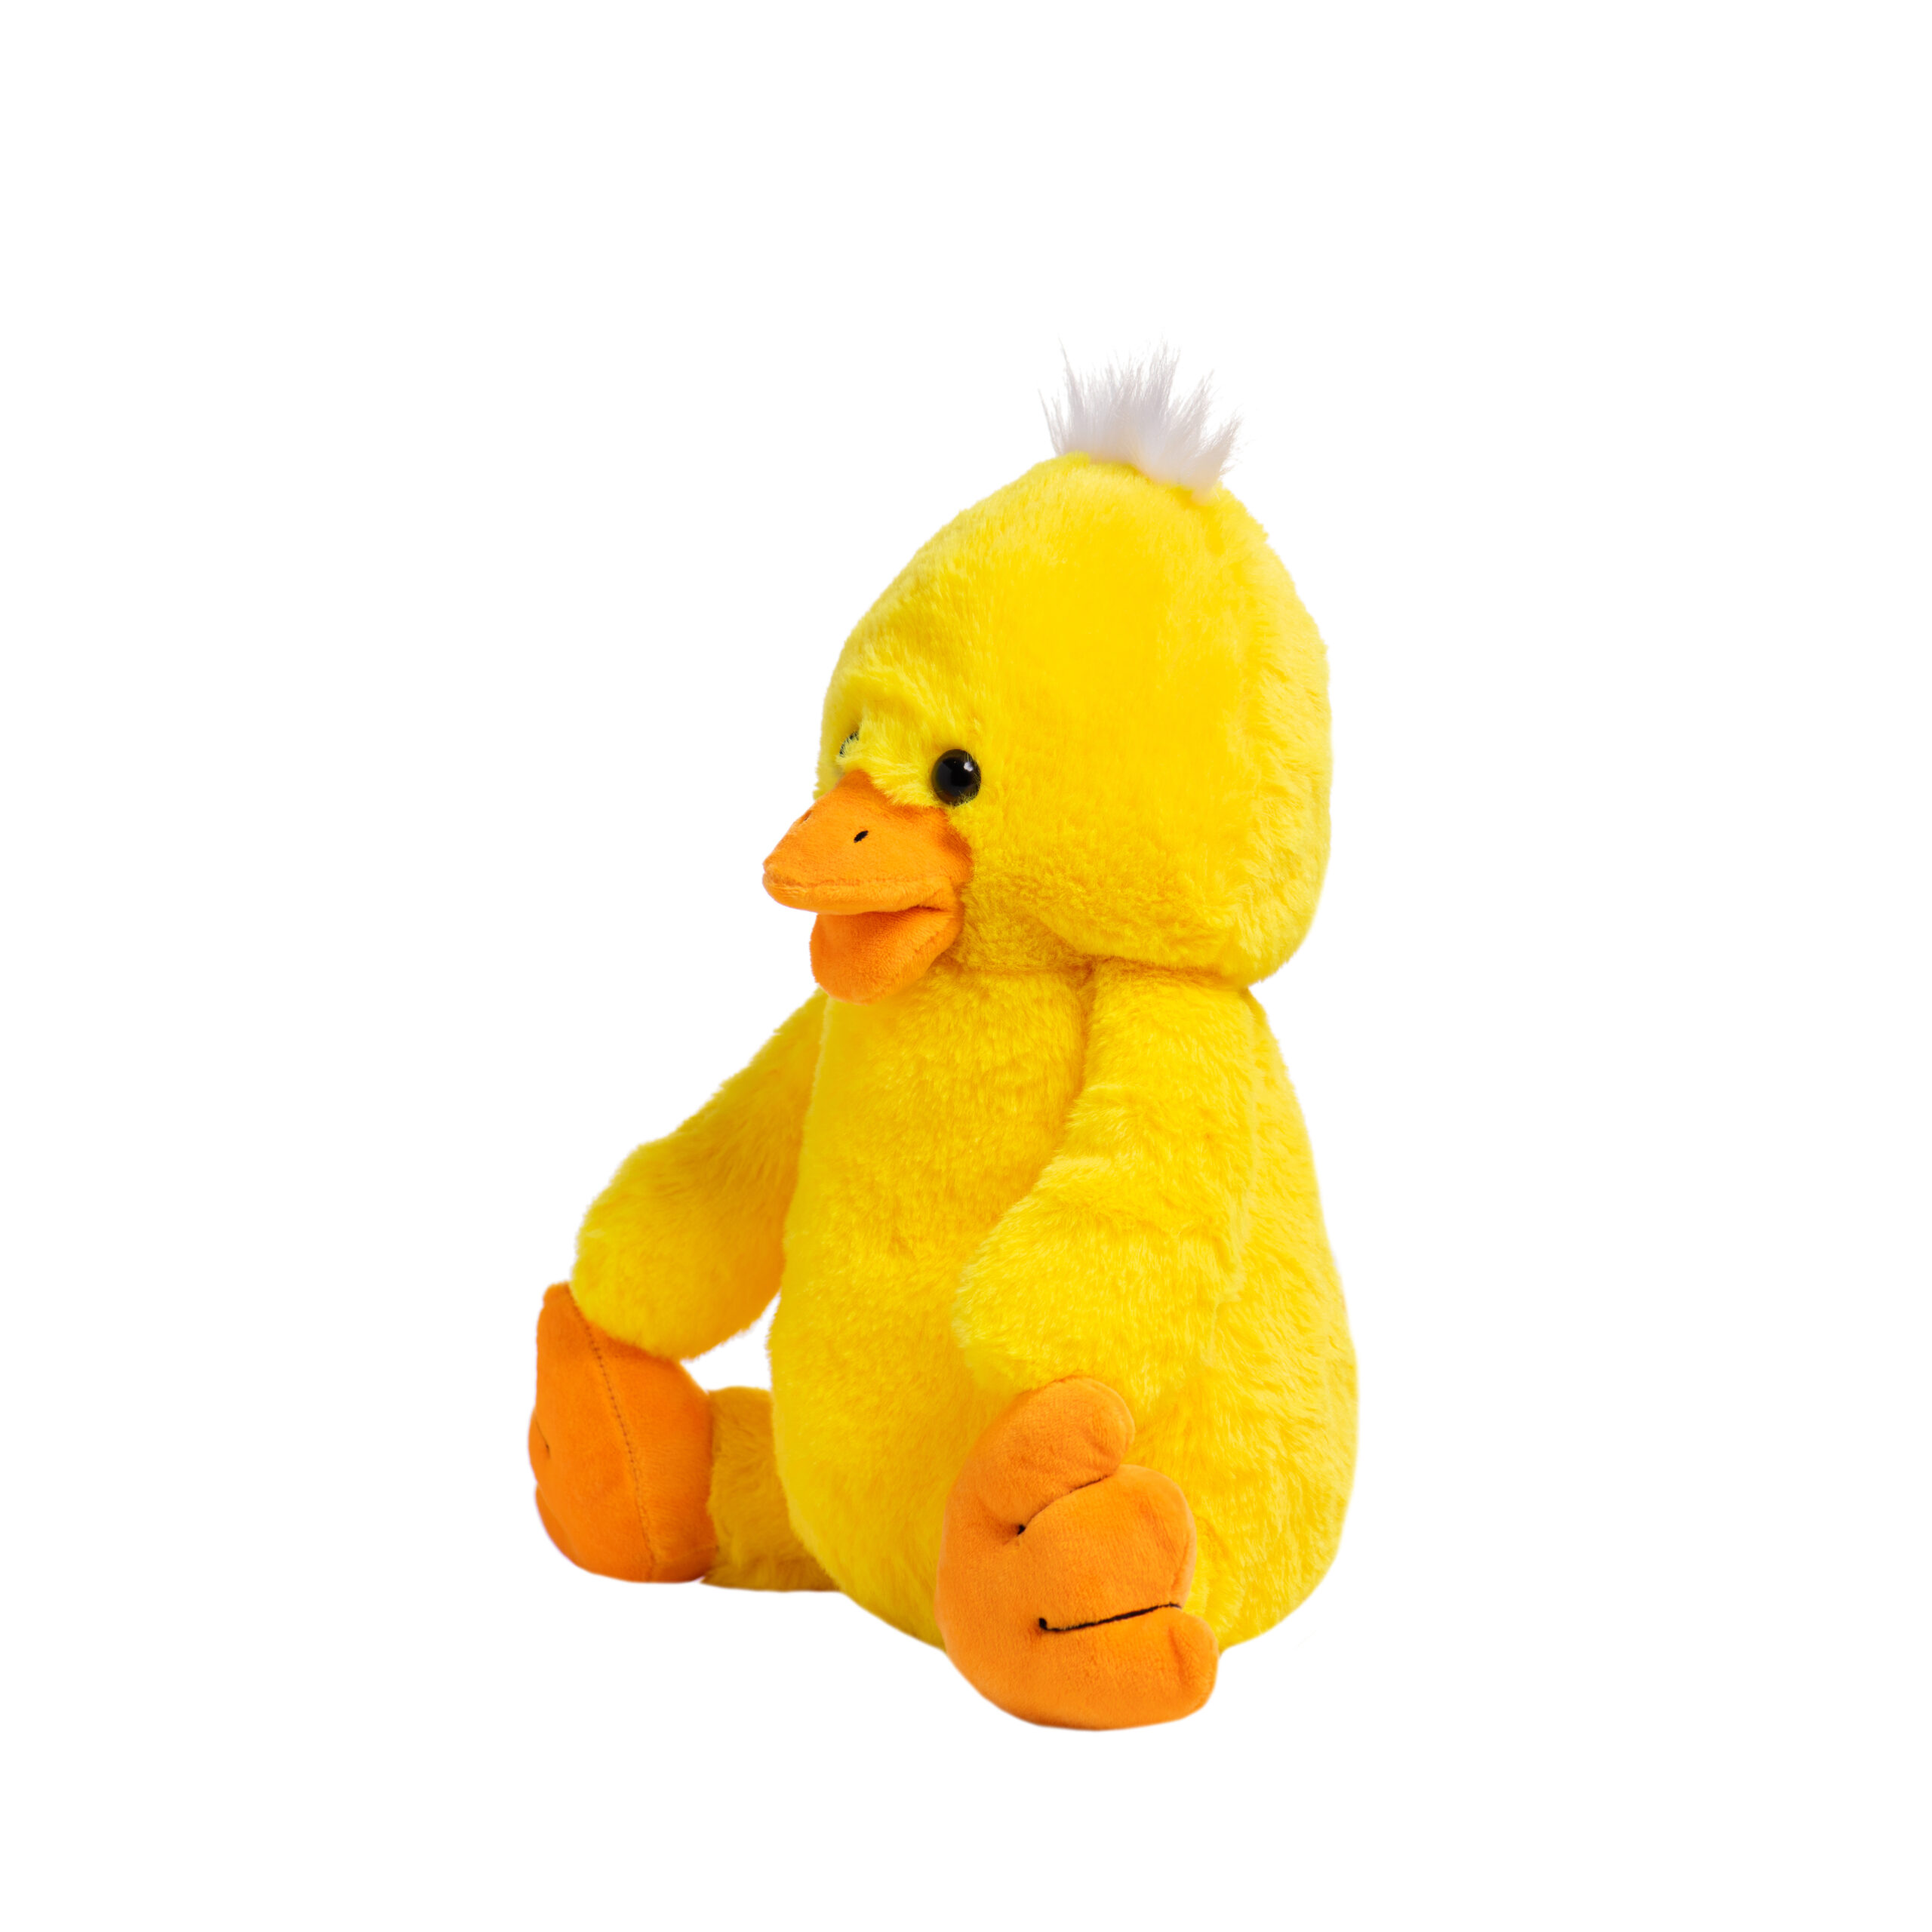 15" Fuzzy Ducky Pre Sale Only